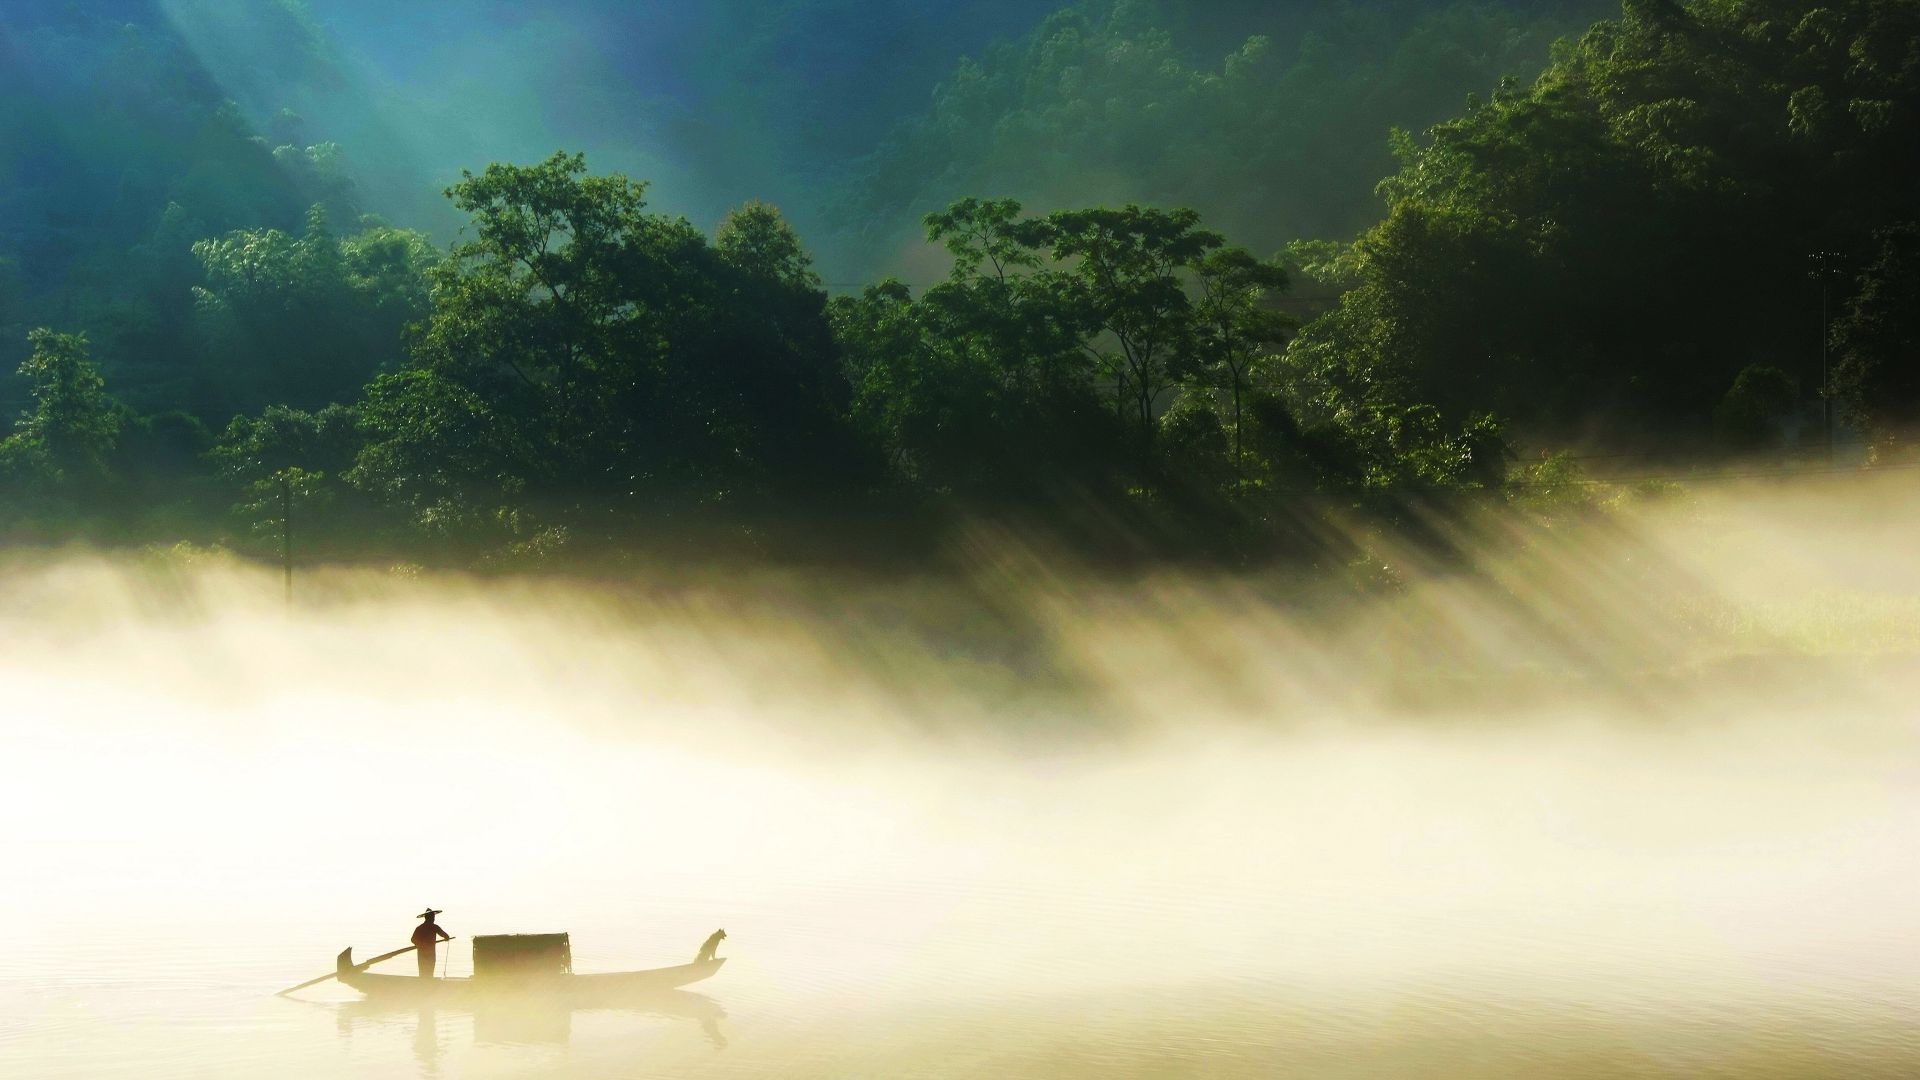 Река, 5k, 4k, солнечный свет, деревья, лодки, туман, River, 5k, 4k wallpaper, sunlight, trees, boat, fog (horizontal)